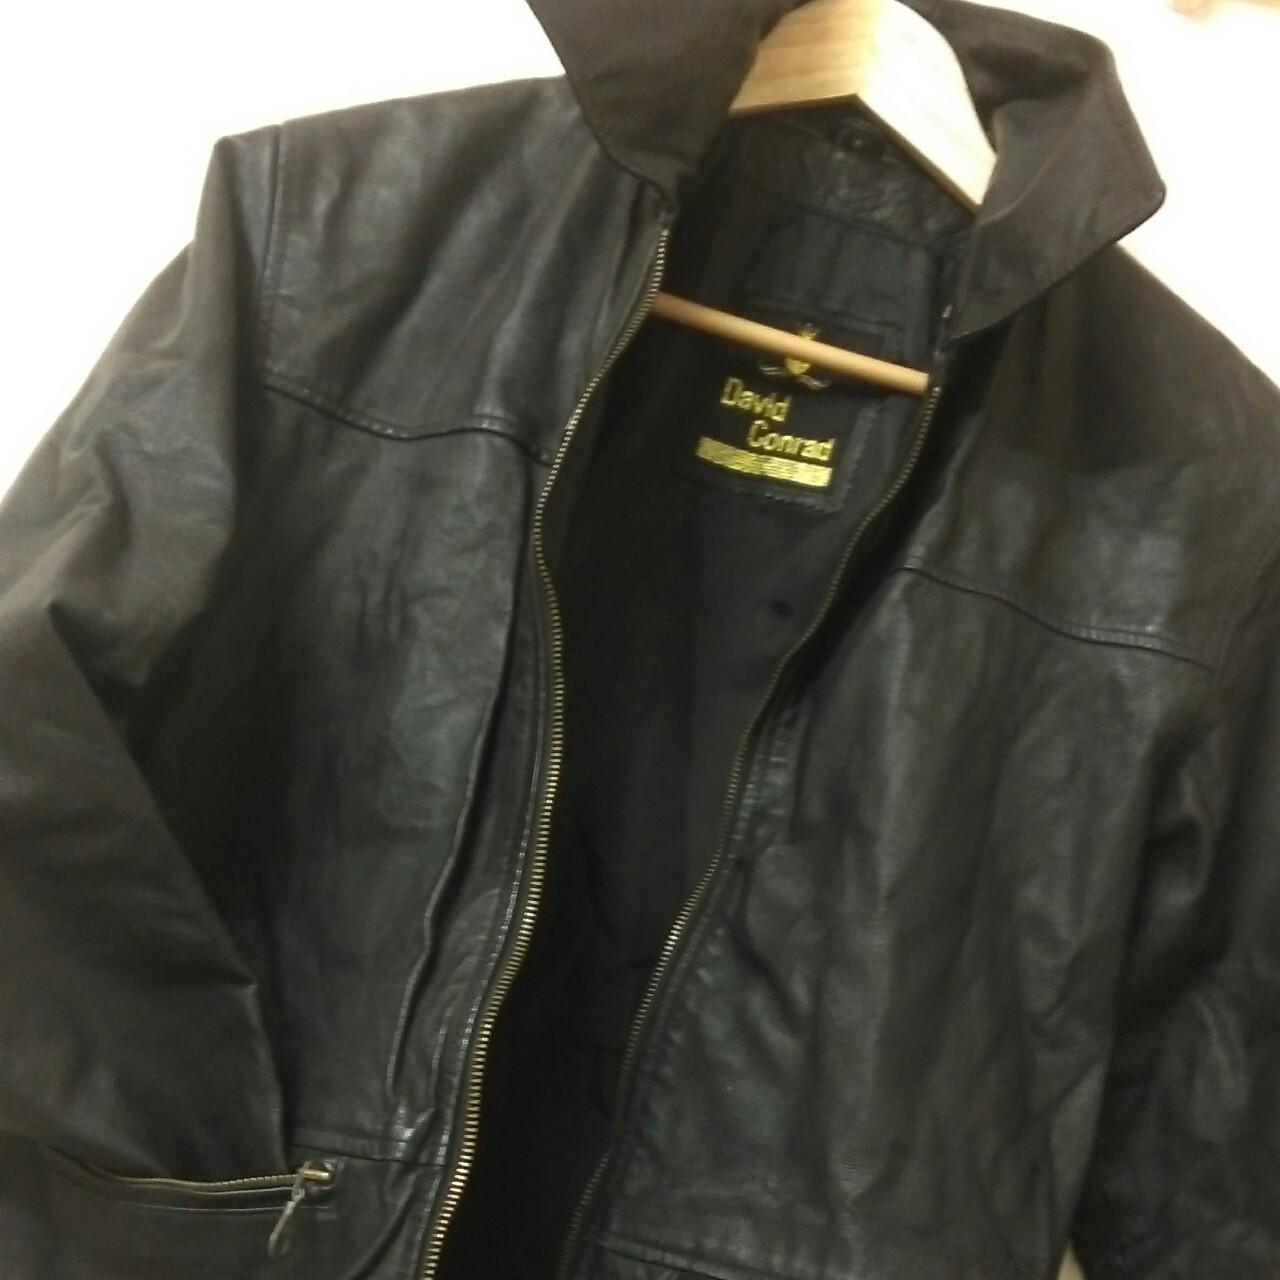 Vintage David Conrad Black Genuine leather... - Depop